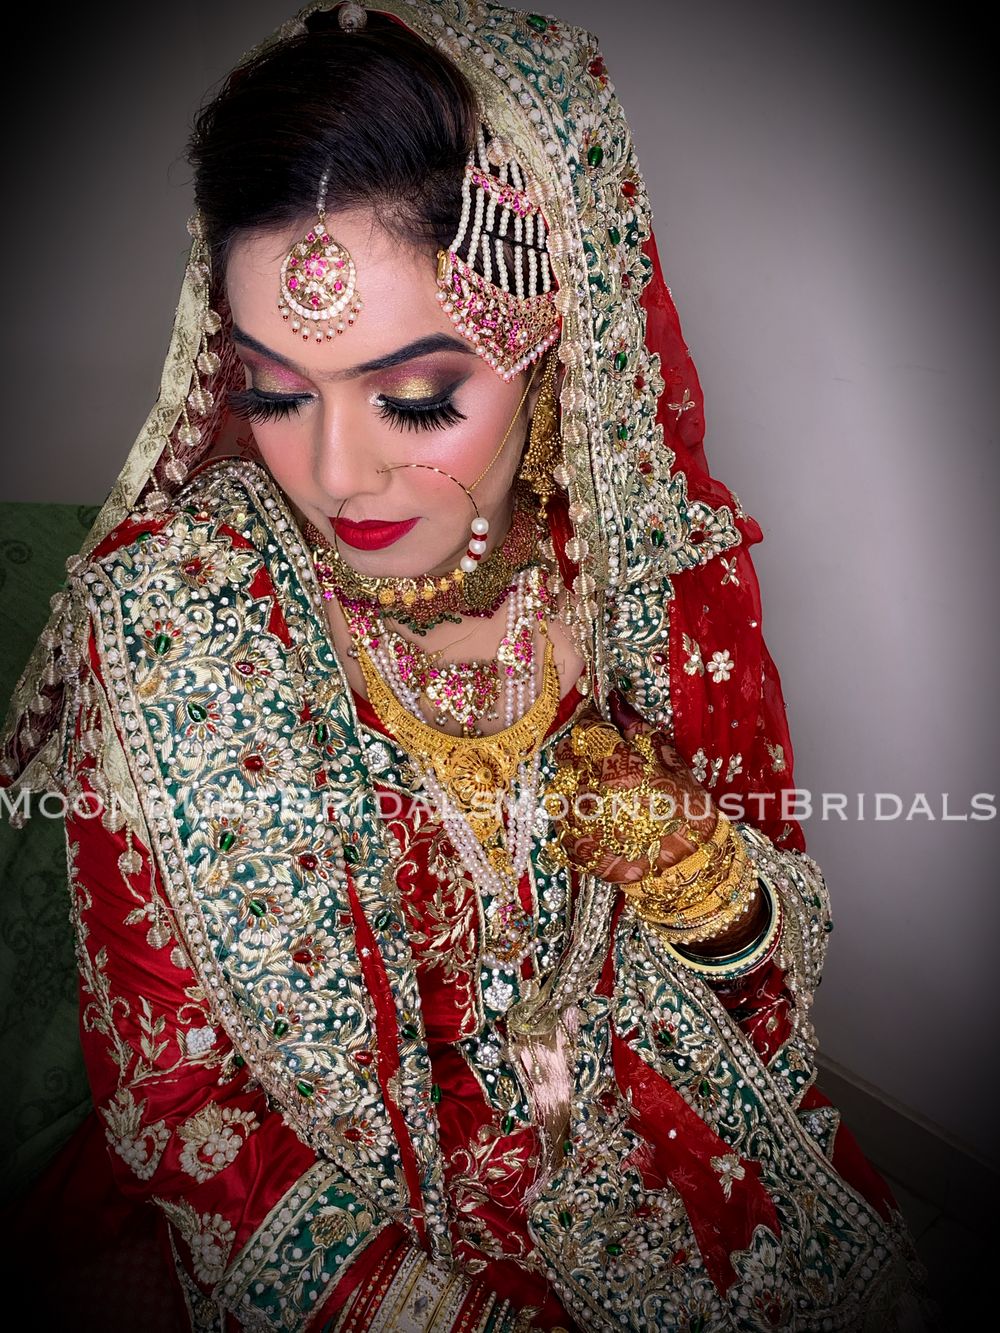 Photo By Moondust Bridals - Bridal Makeup